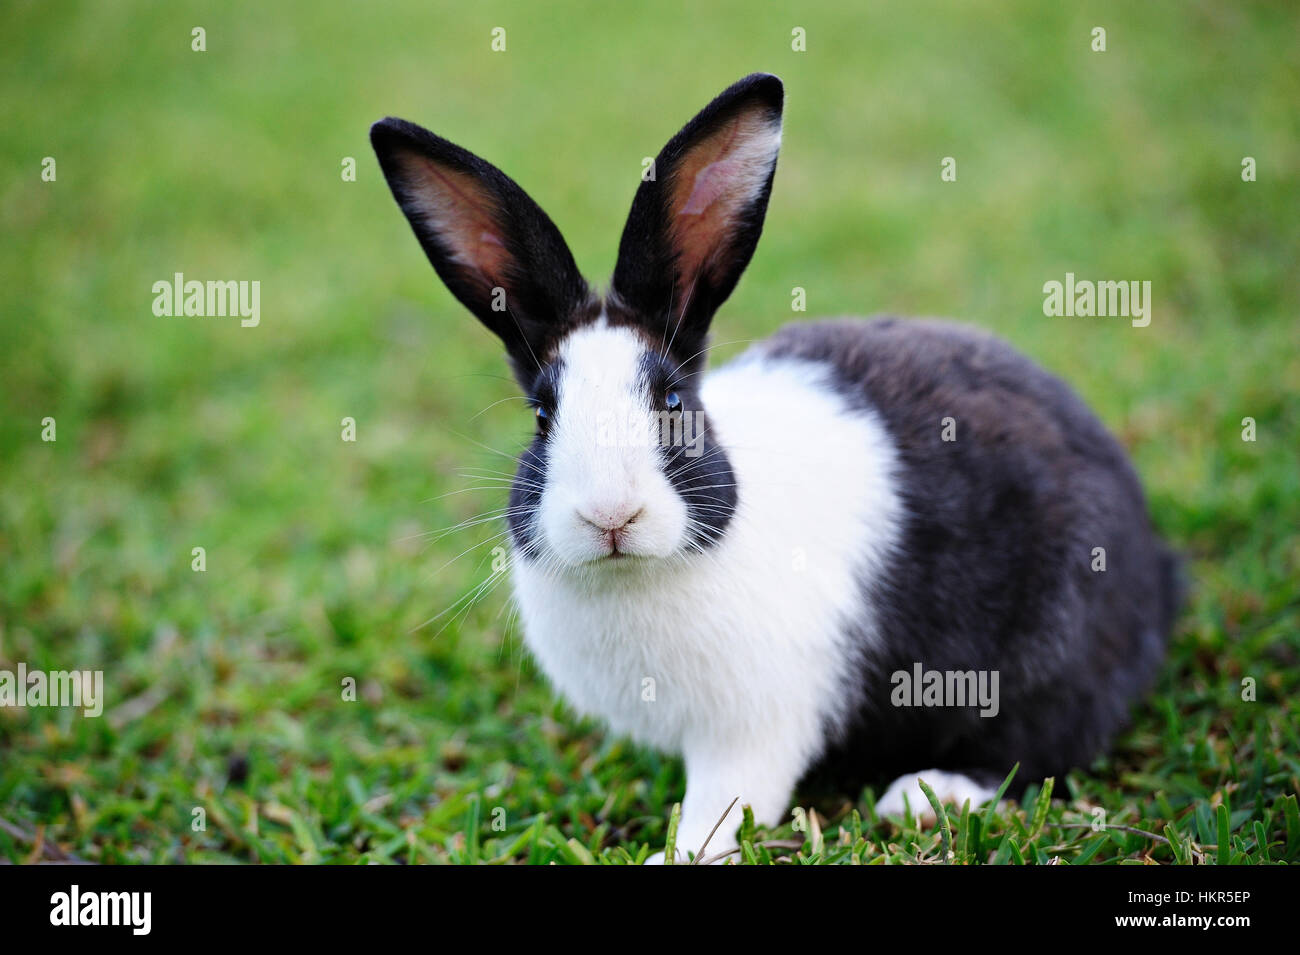 small black rabbit sit on green lawn grass Stock Photo